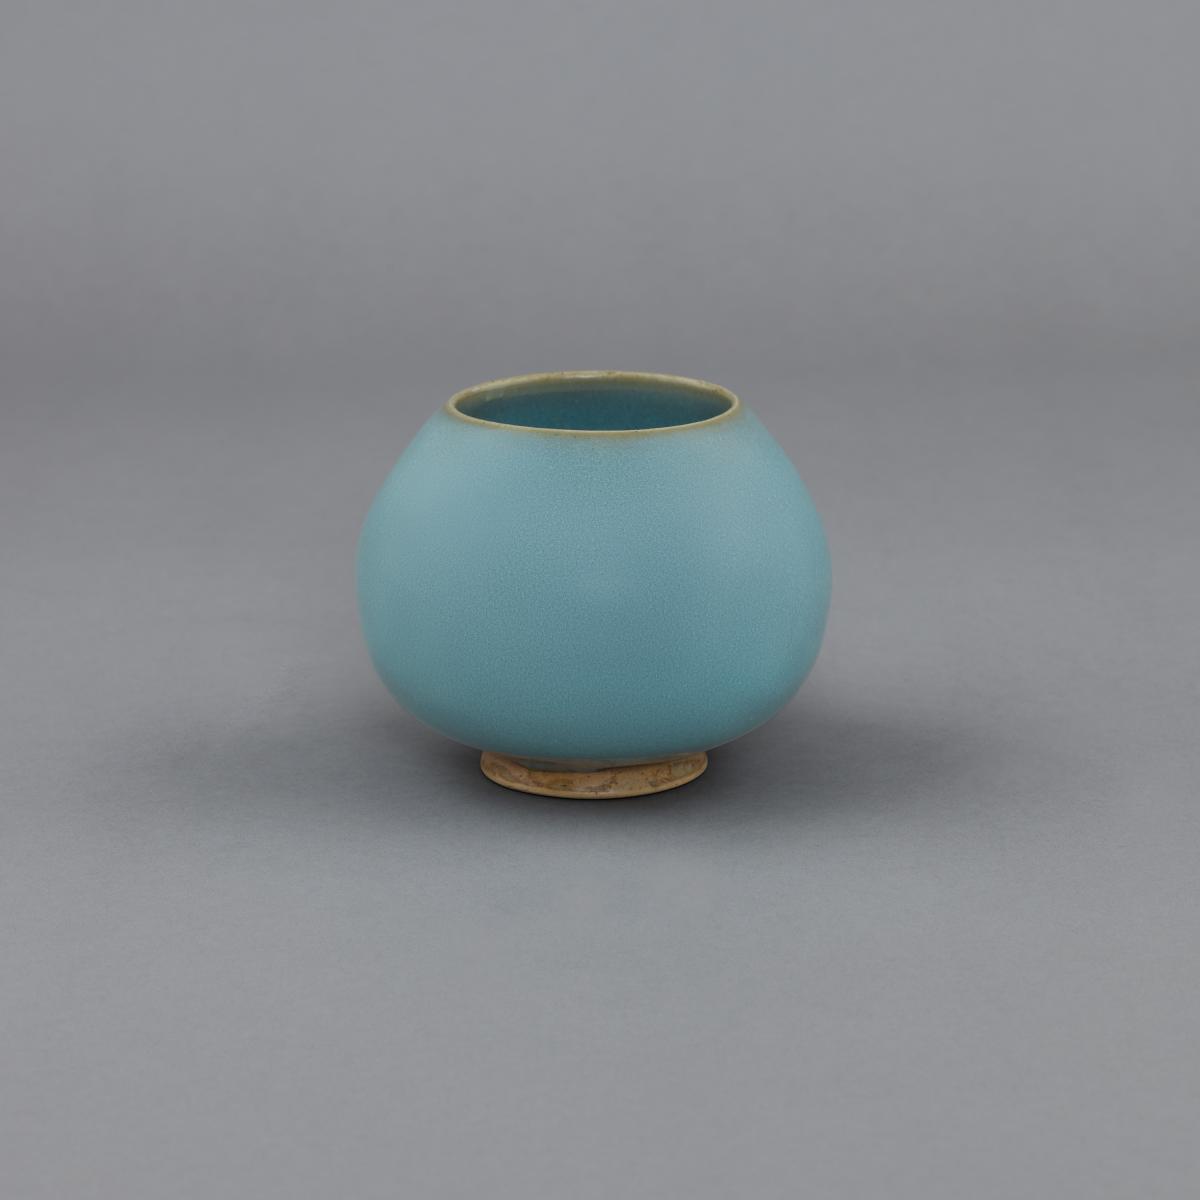 Chinese ceramic Jun ware lotus-bud form waterpot, jixin’guan, Northern Song dynasty, Jun kilns, Henan province, 11th – 12th century.